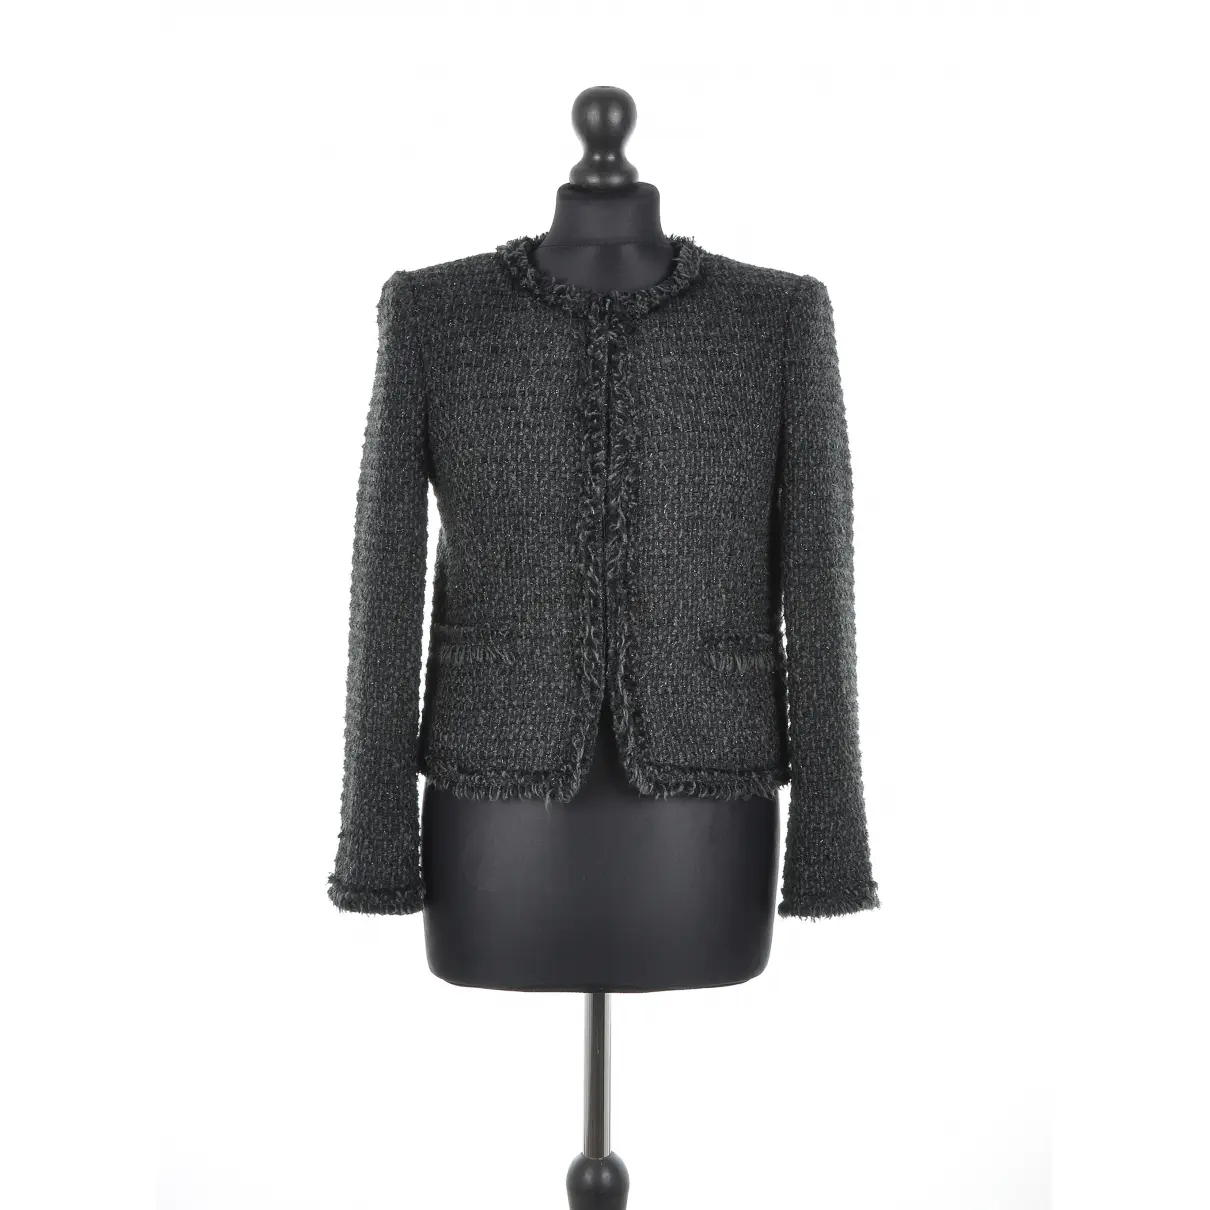 Buy Alice & Olivia Black Polyester Jacket online